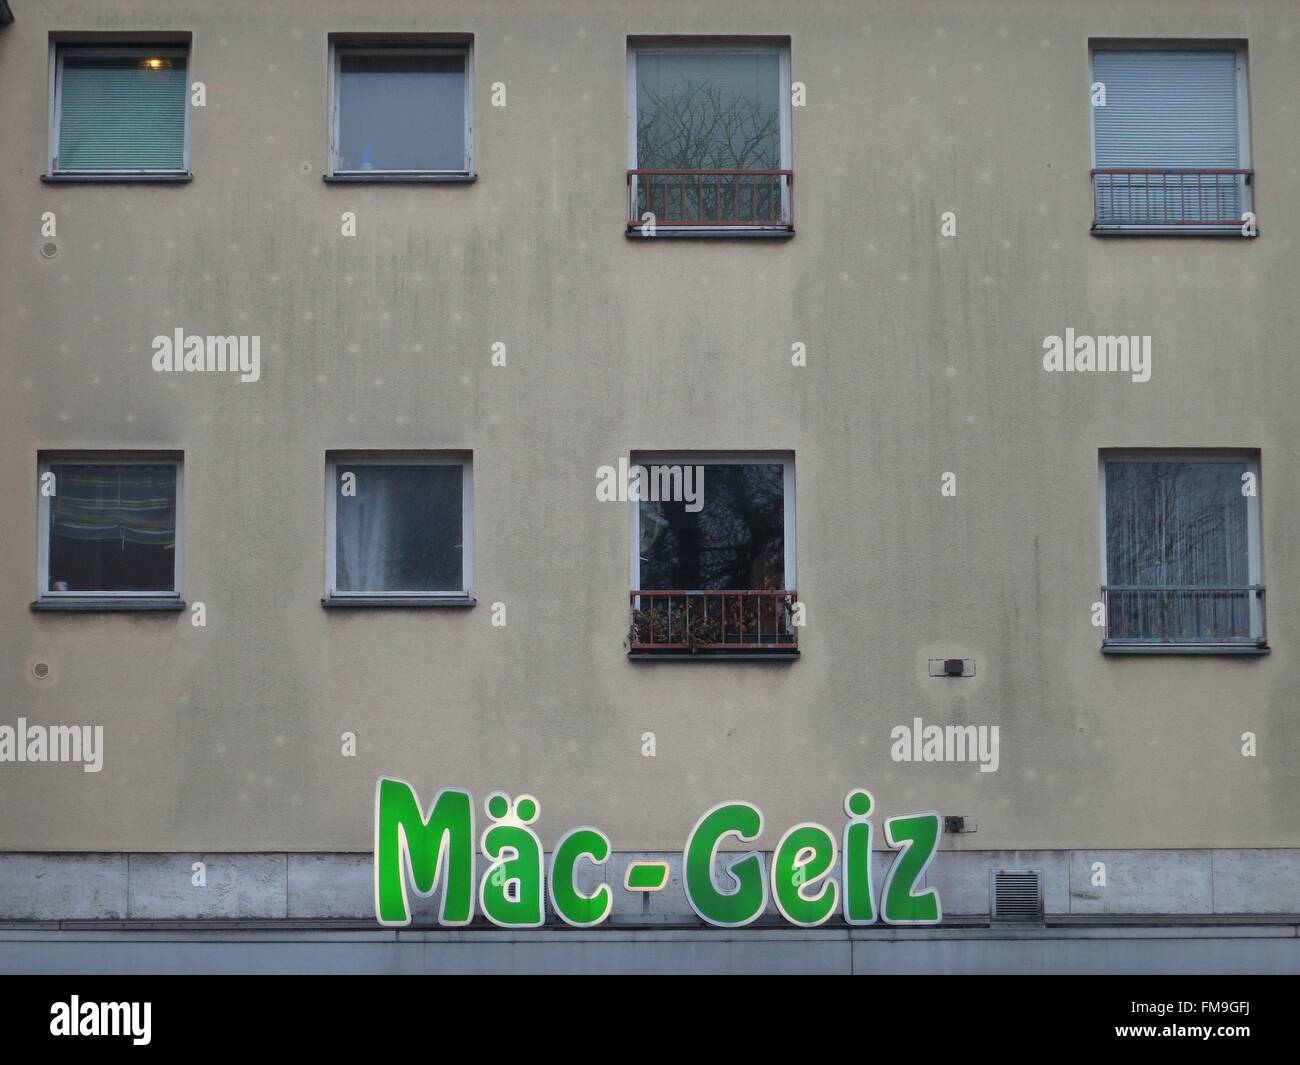 Discount shop Mäc-Geiz (Mac Meanness) in Berlin - February 2016 Stock Photo